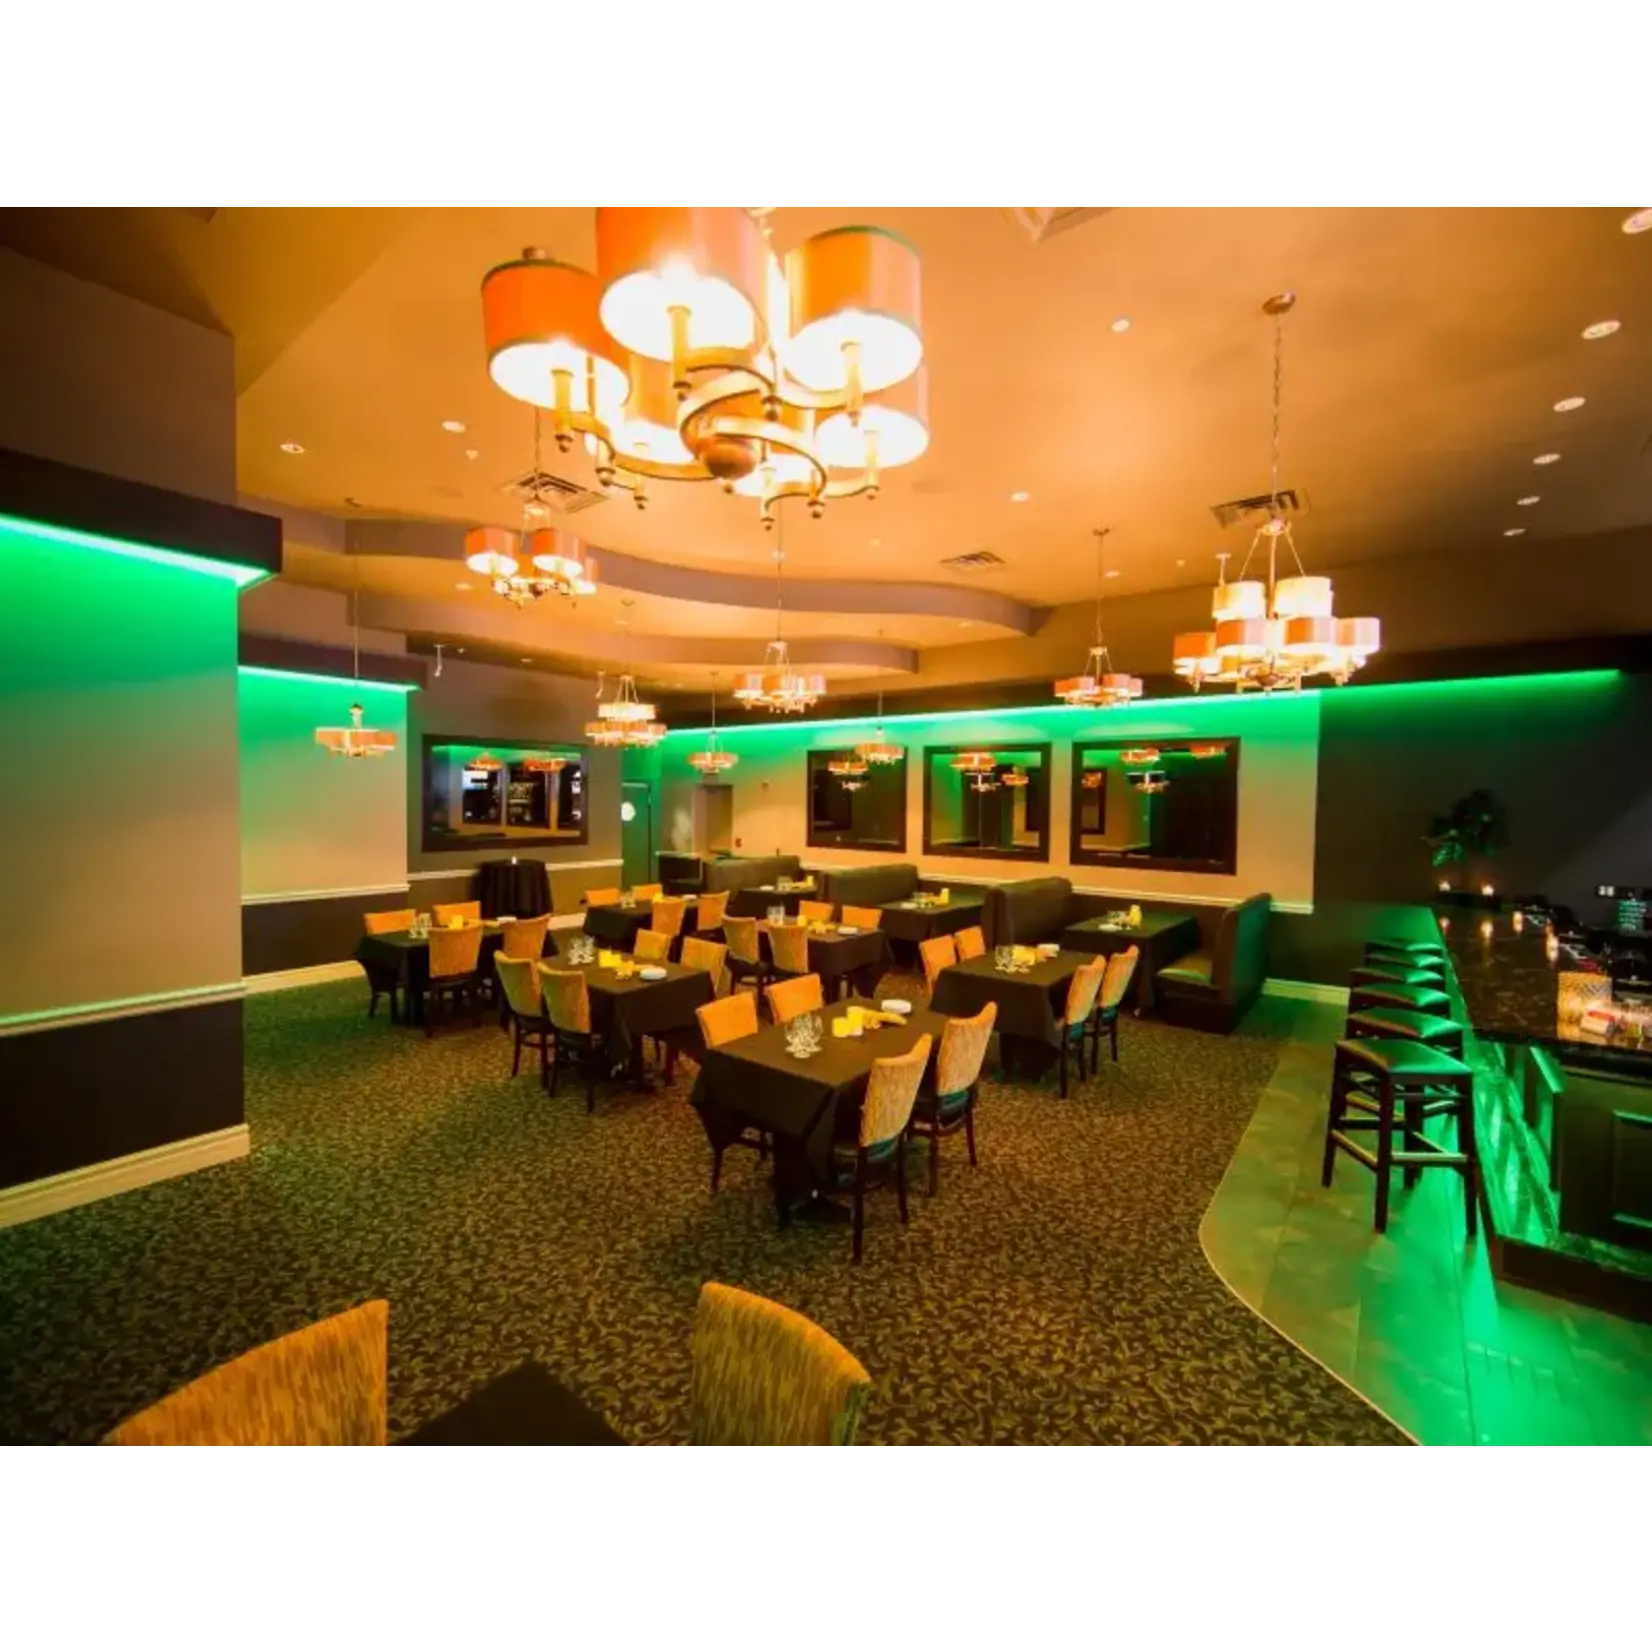 Pavilion Restaurant & Lounge-Northbrook Pavilion Restaurant & Lounge-Northbrook $40.00 Dining certificate